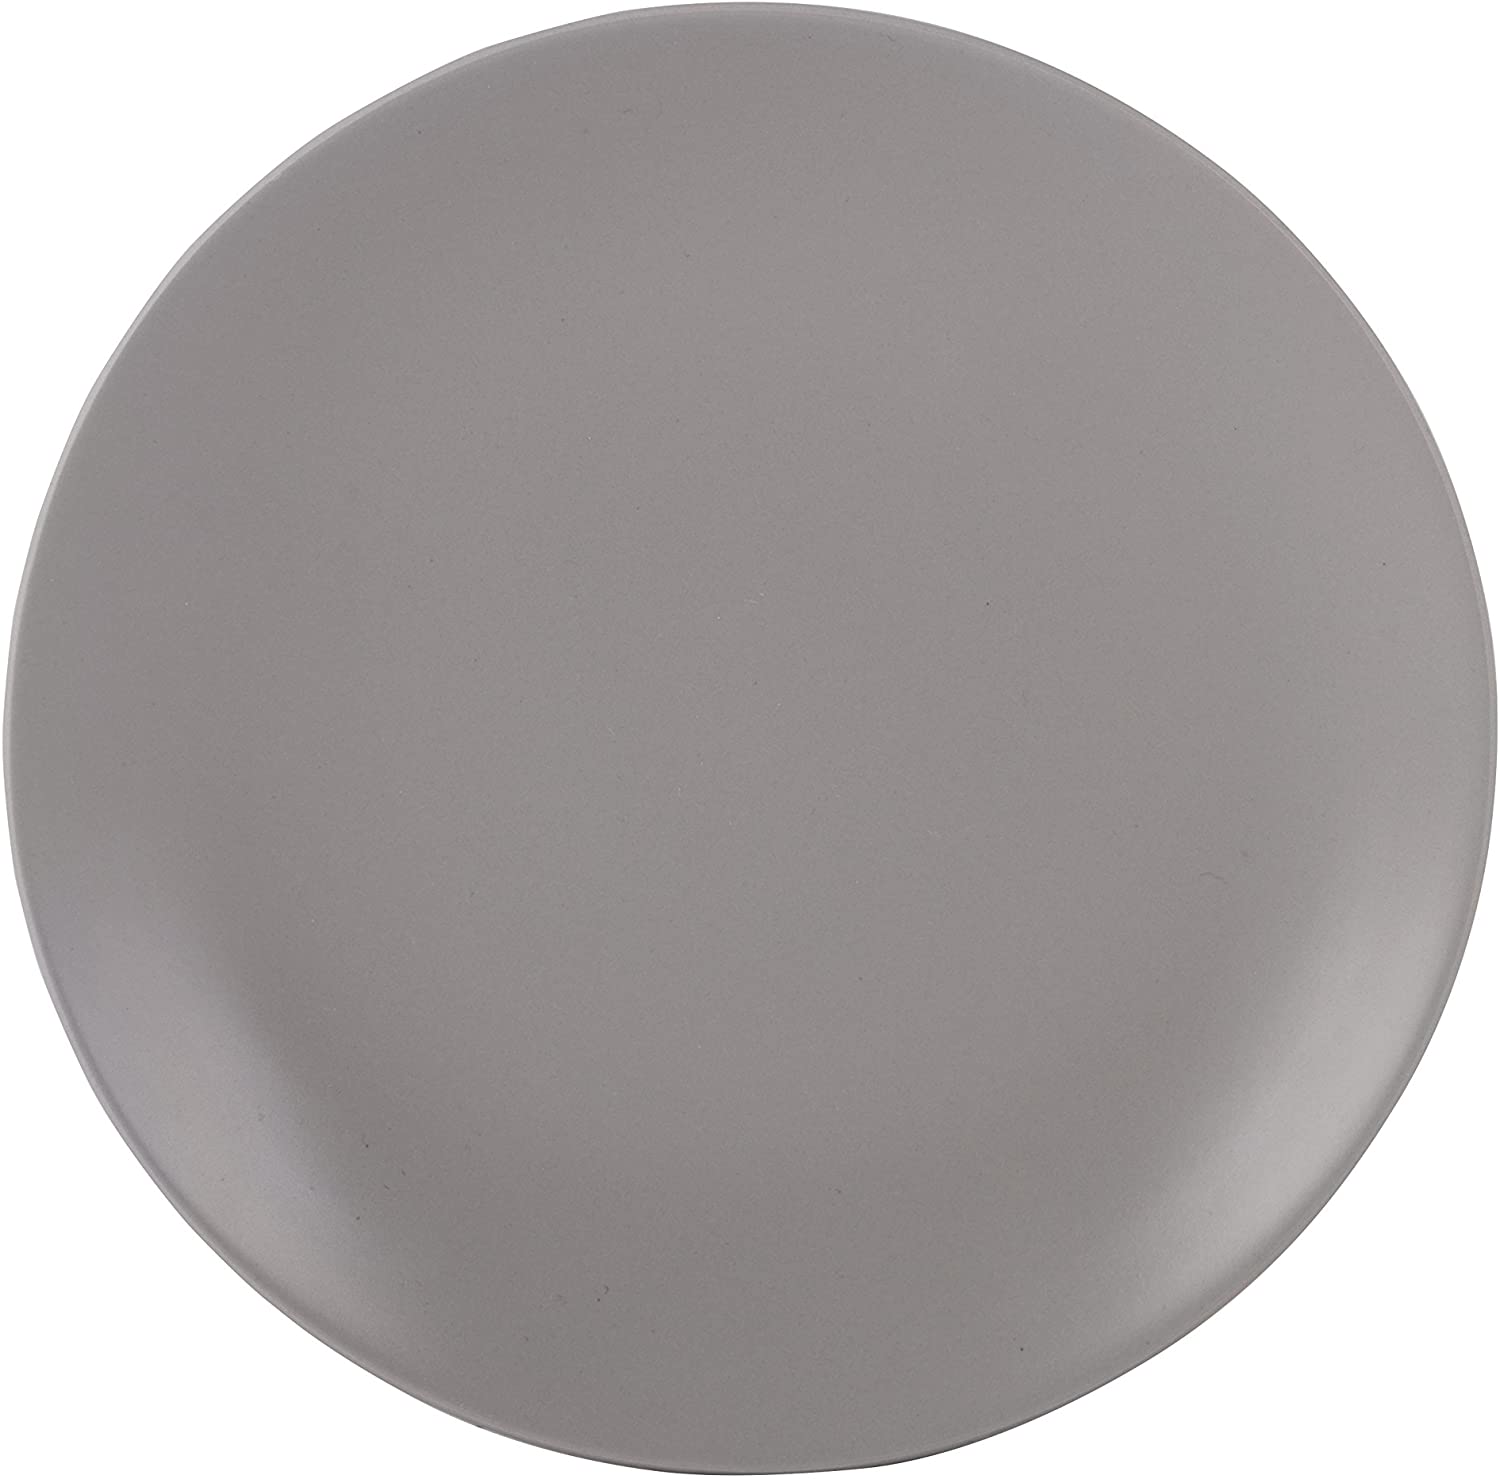 Mikasa Gourmet Round Ceramic Dinner Plate, Grey - 28cm